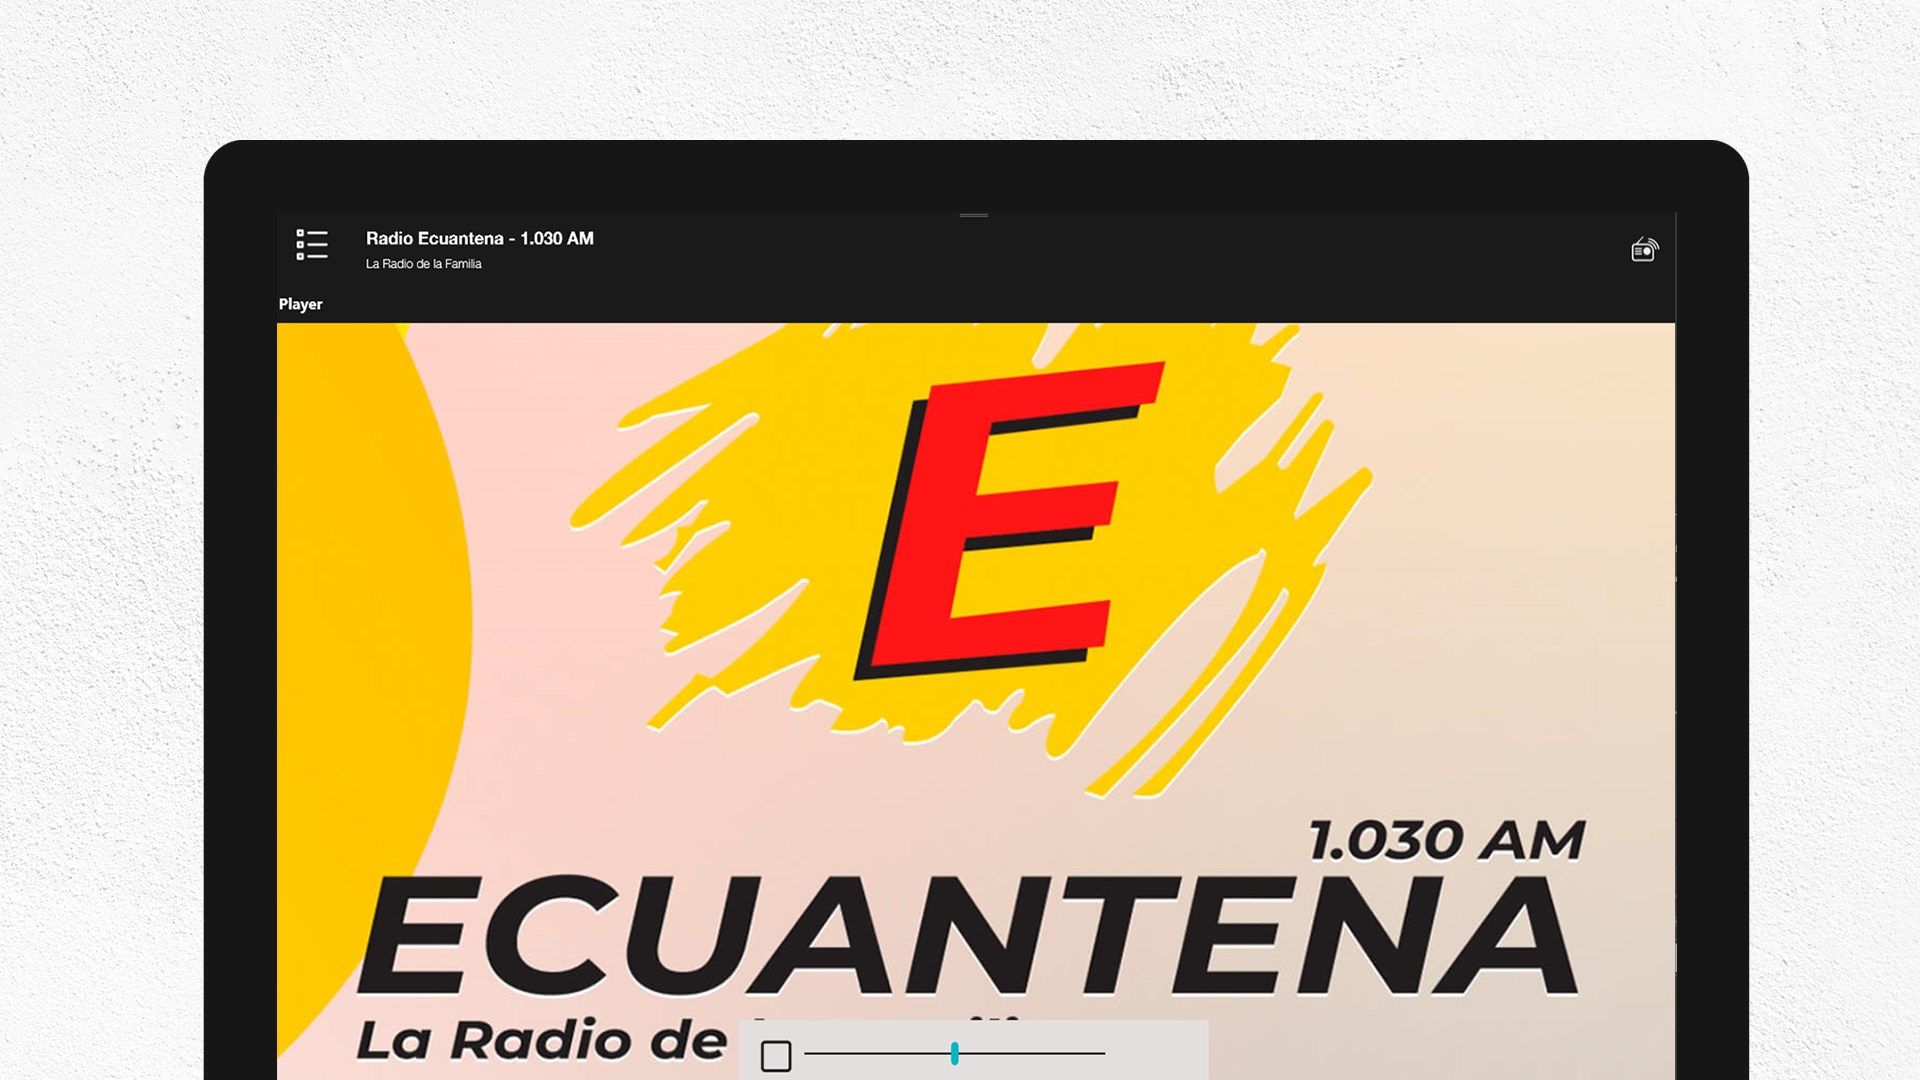 Radio Ecuantena - 1.030 AM